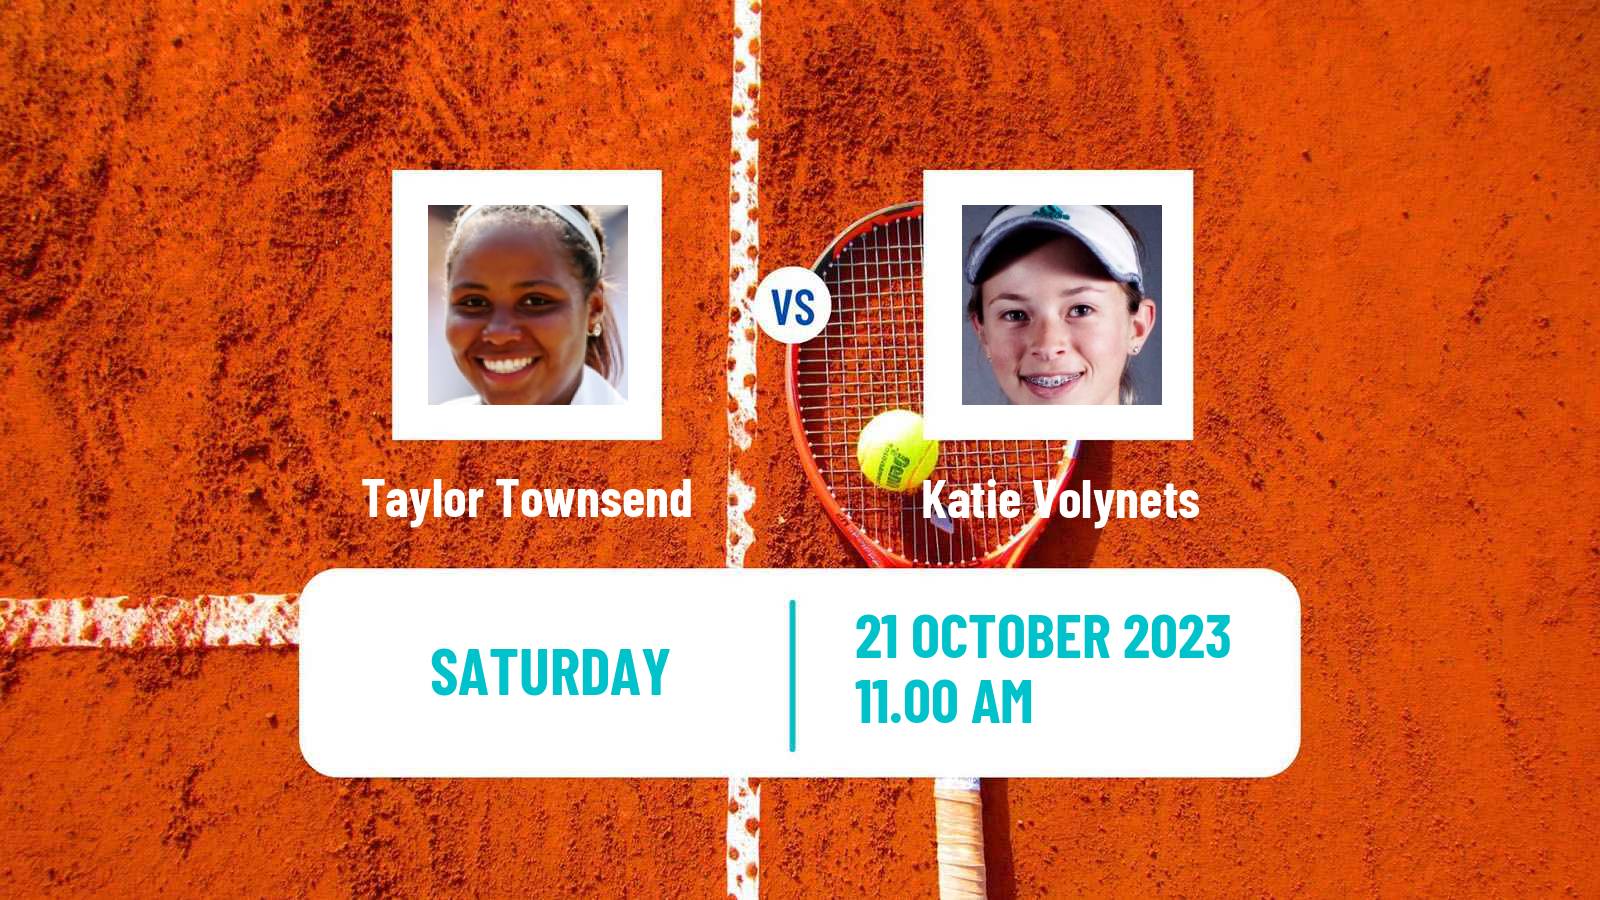 Tennis ITF W80 Macon Ga Women Taylor Townsend - Katie Volynets